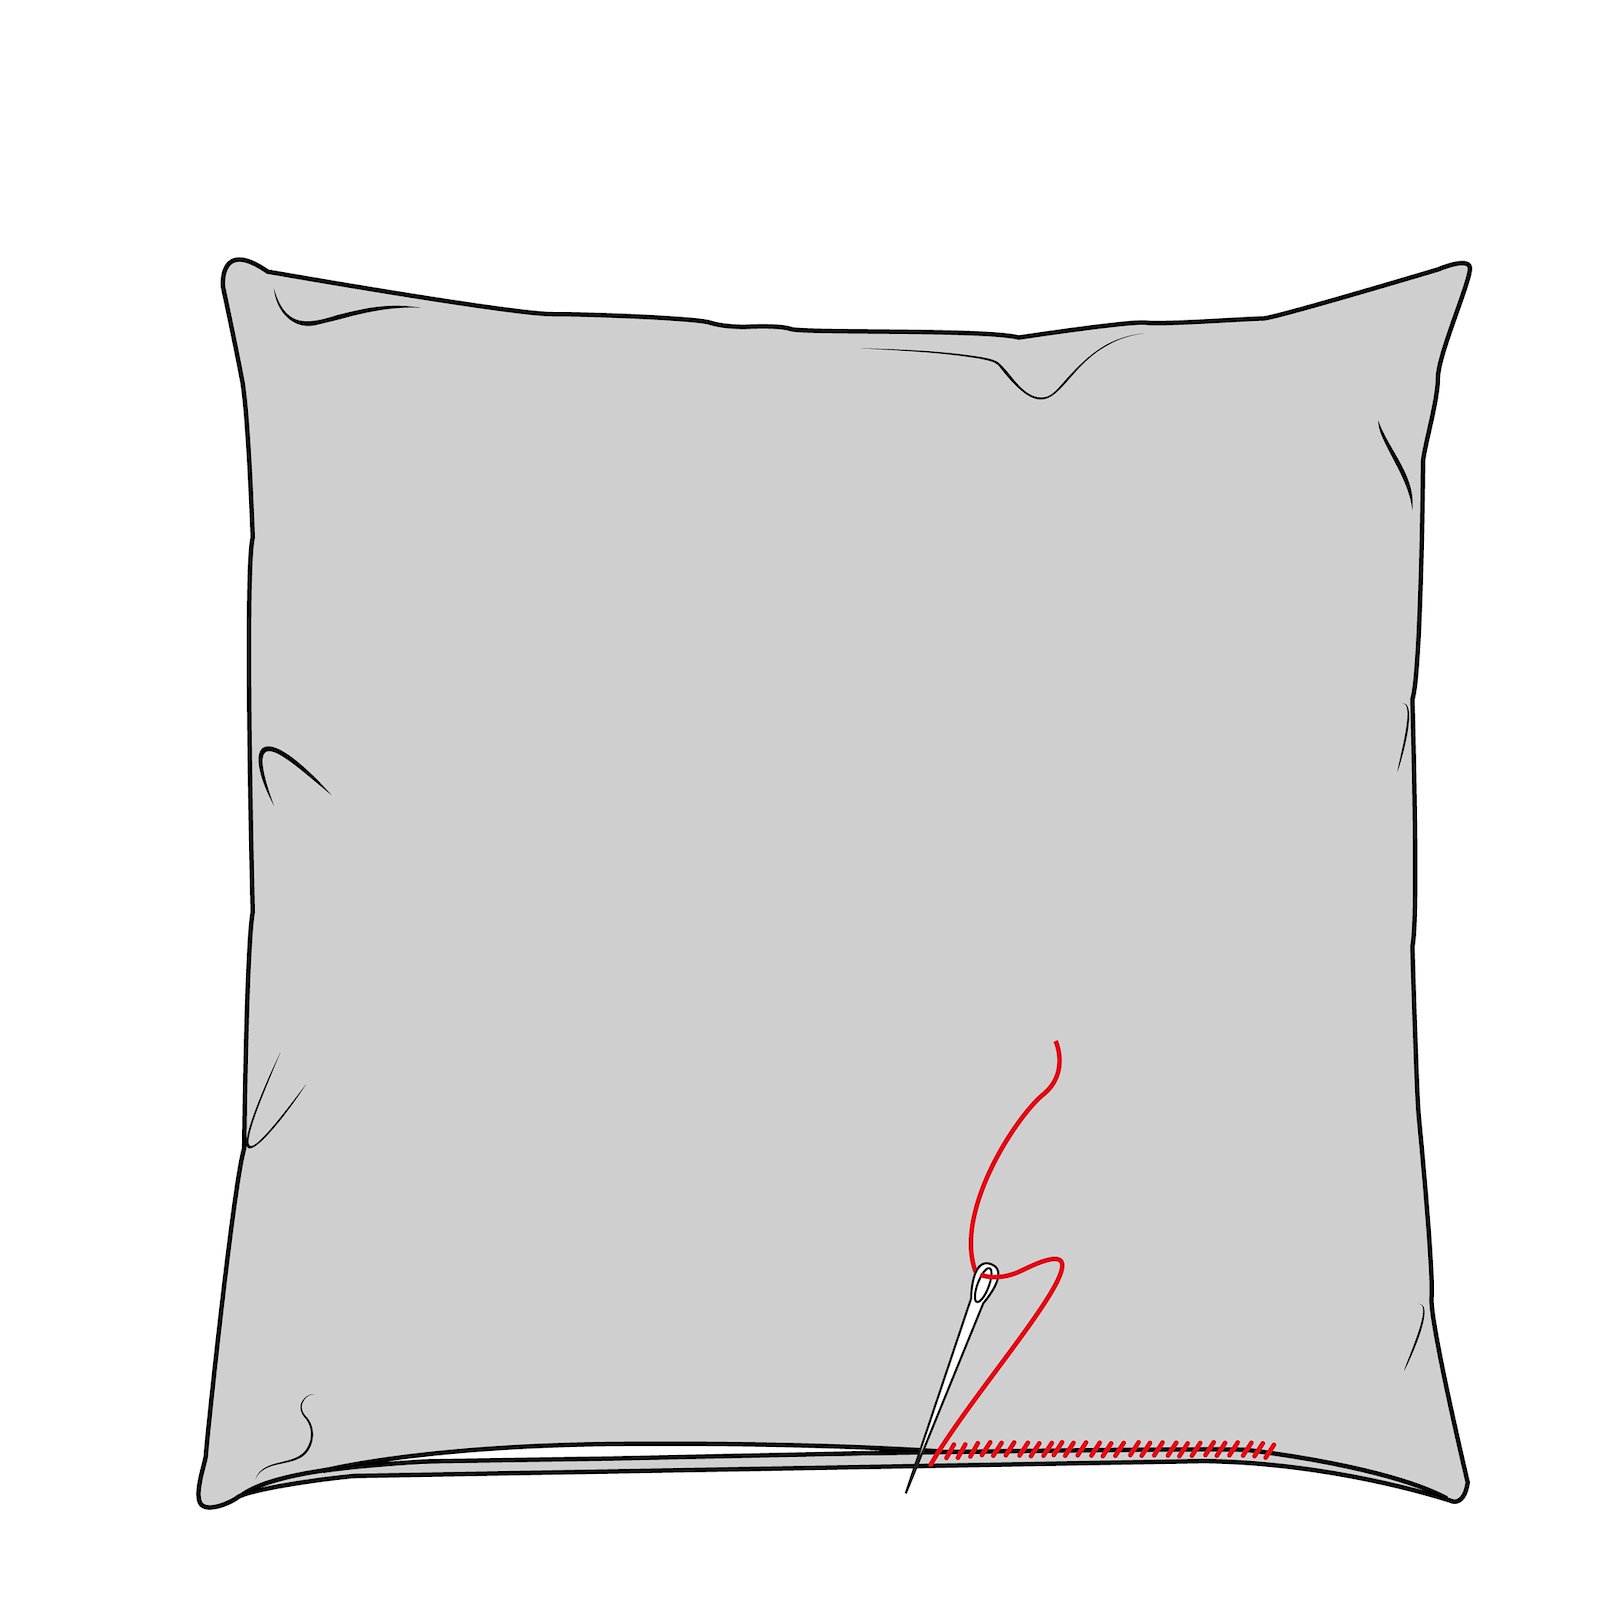 Sewing pattern: Cushion Cover DIY8038-step4.jpg